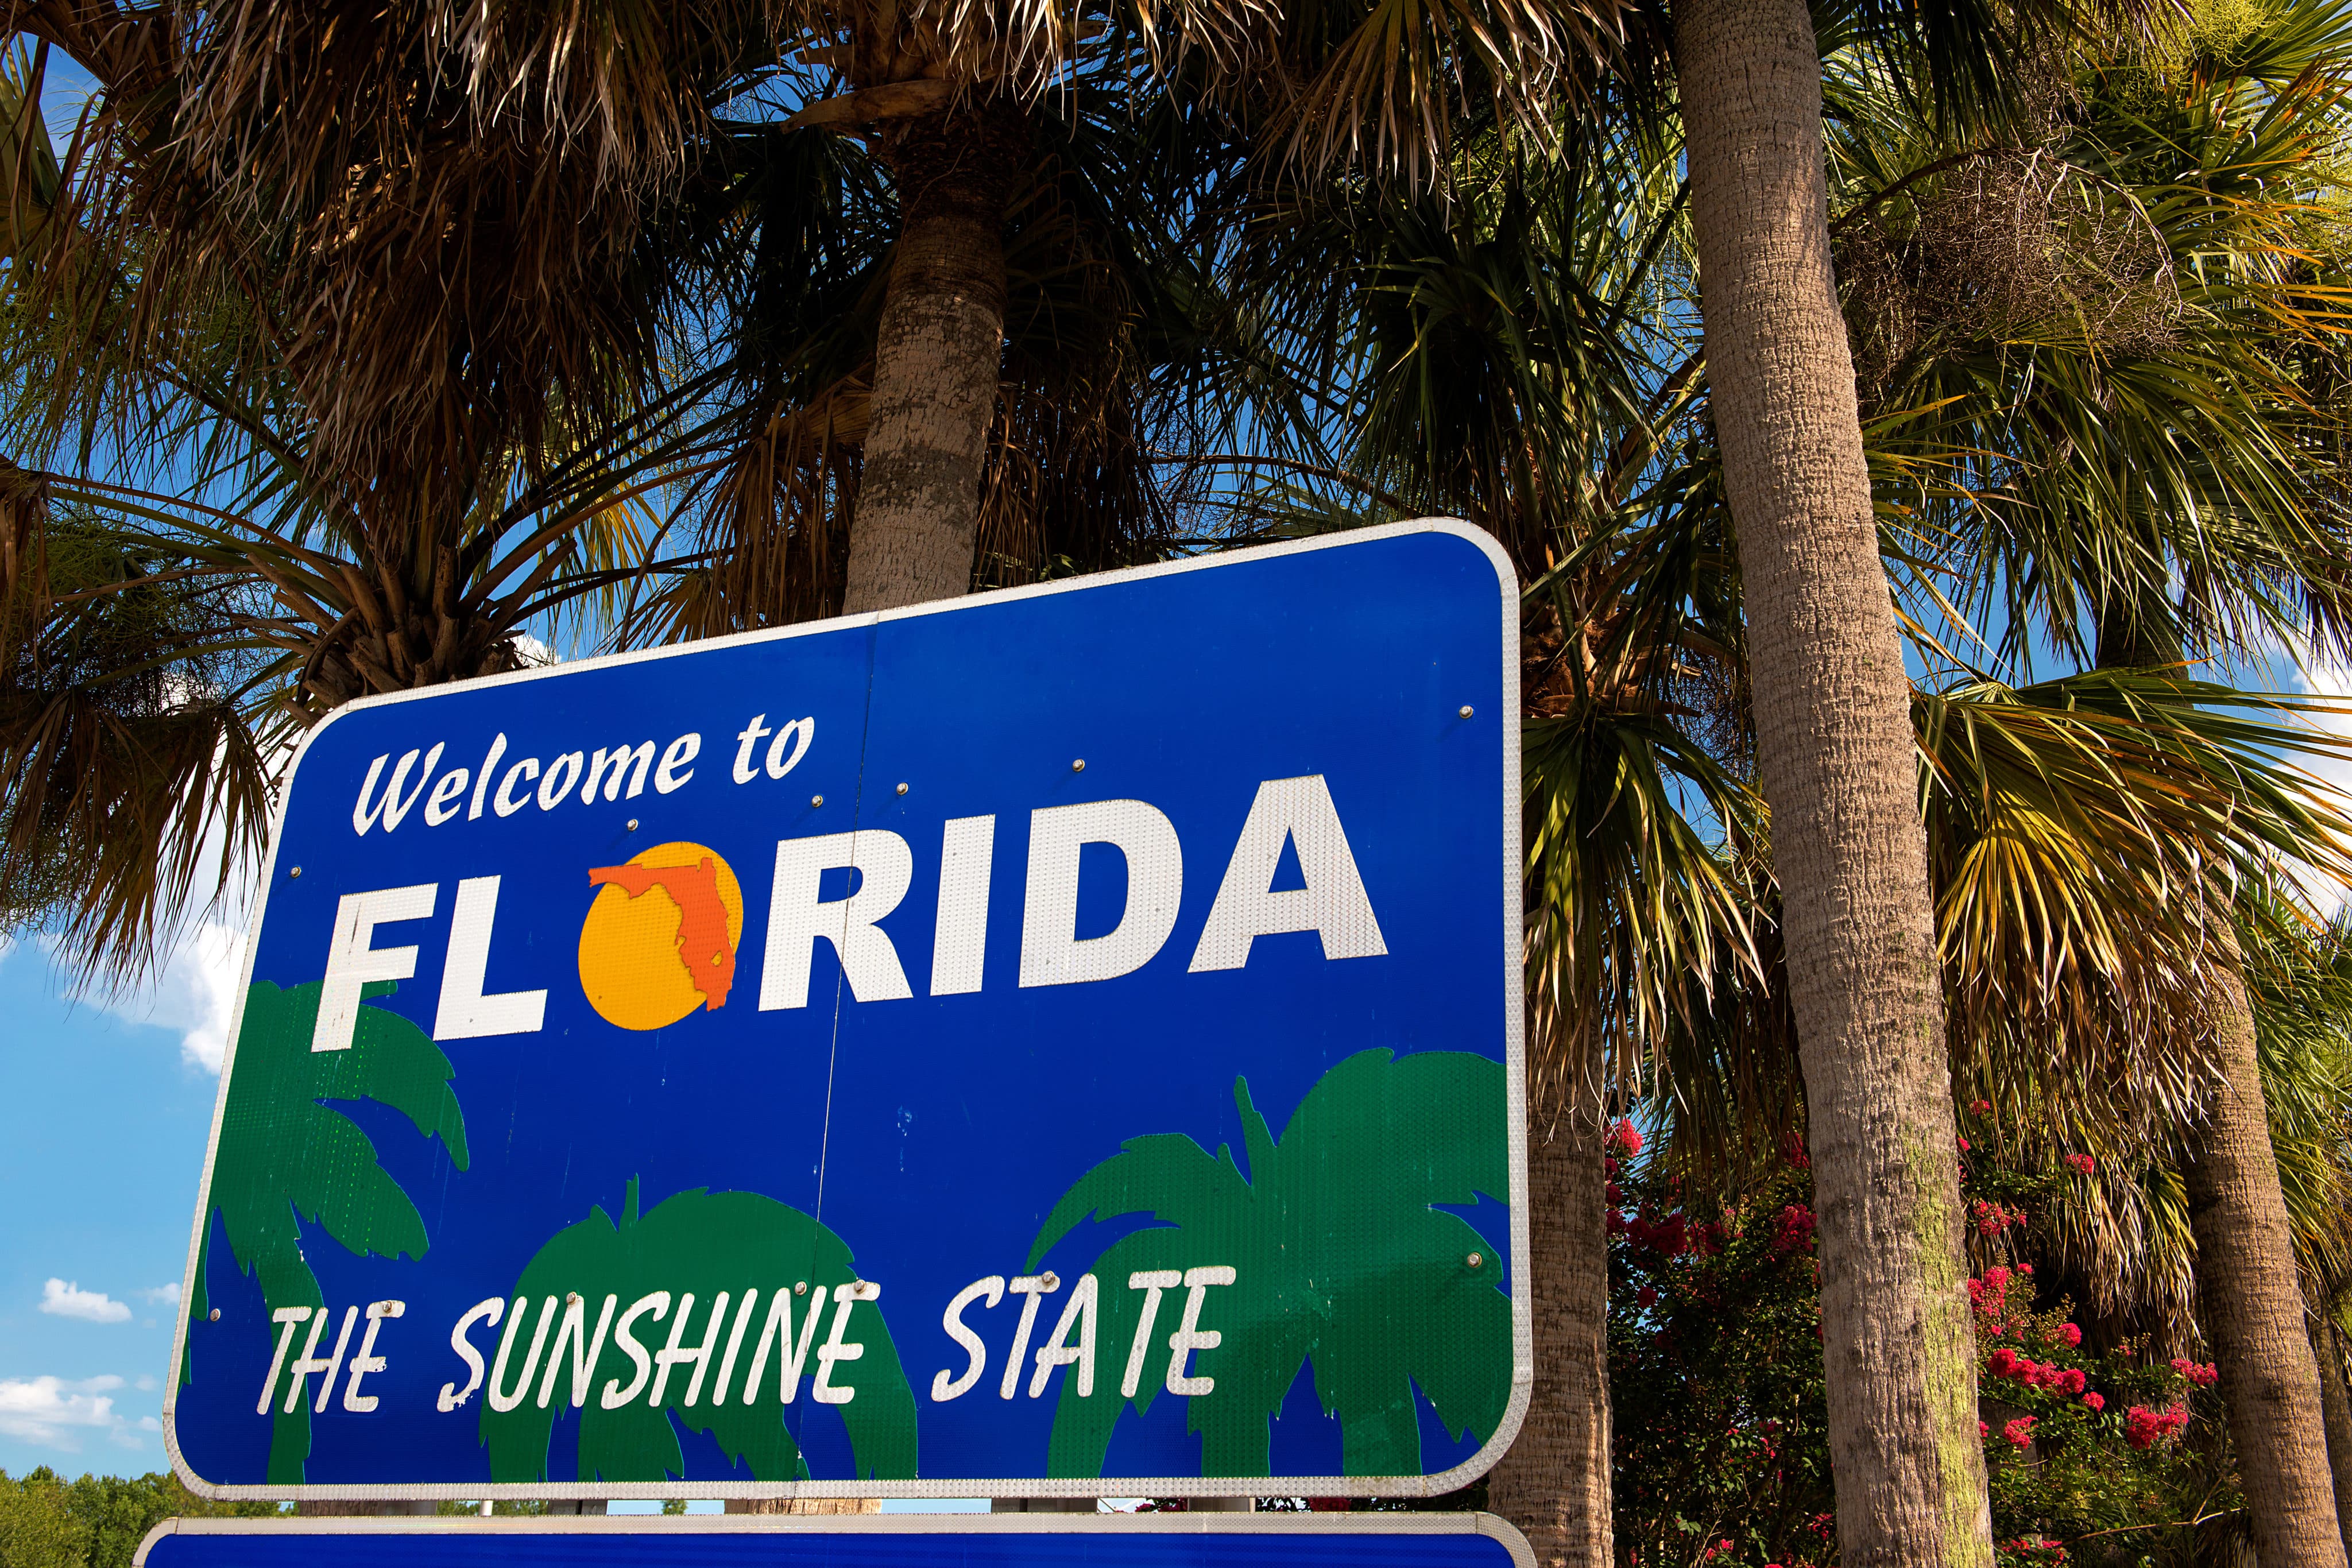 Newest Legalization Effort in Florida Receives $5 Million in Support